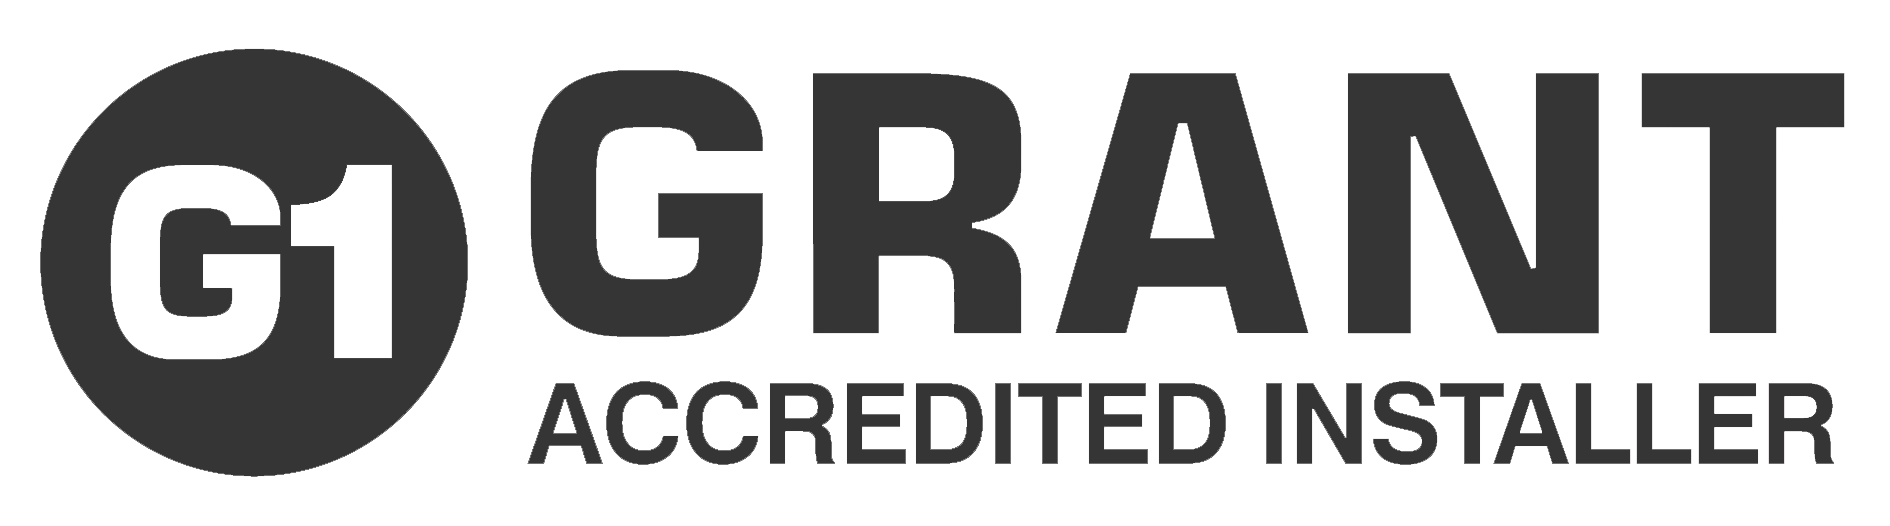 Oakhill Plumbing & Heating- Grant Accredited Installer